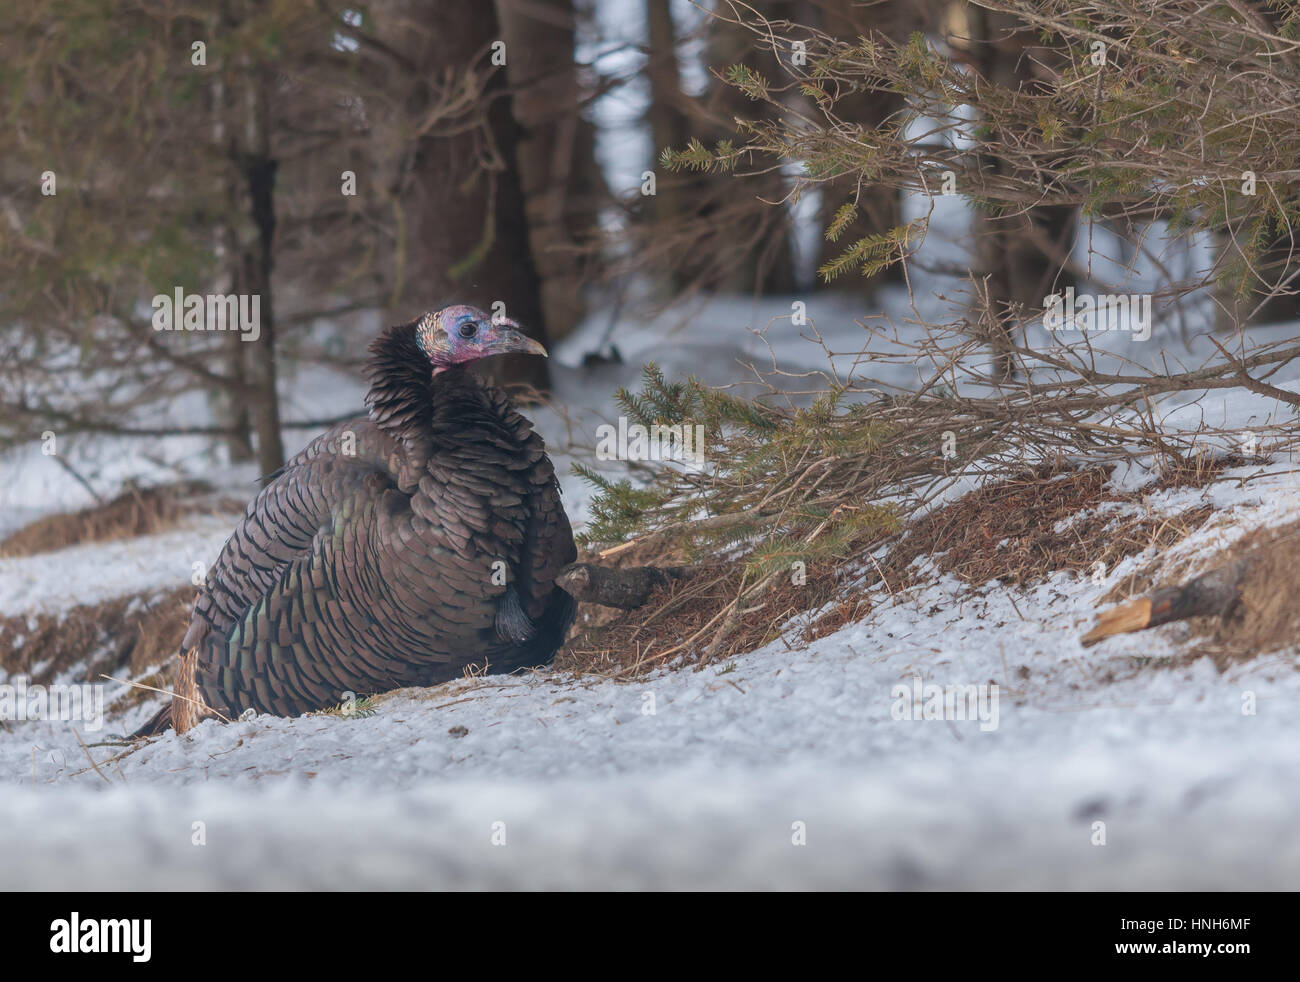 Wild turkey in the winter forest Stock Photo